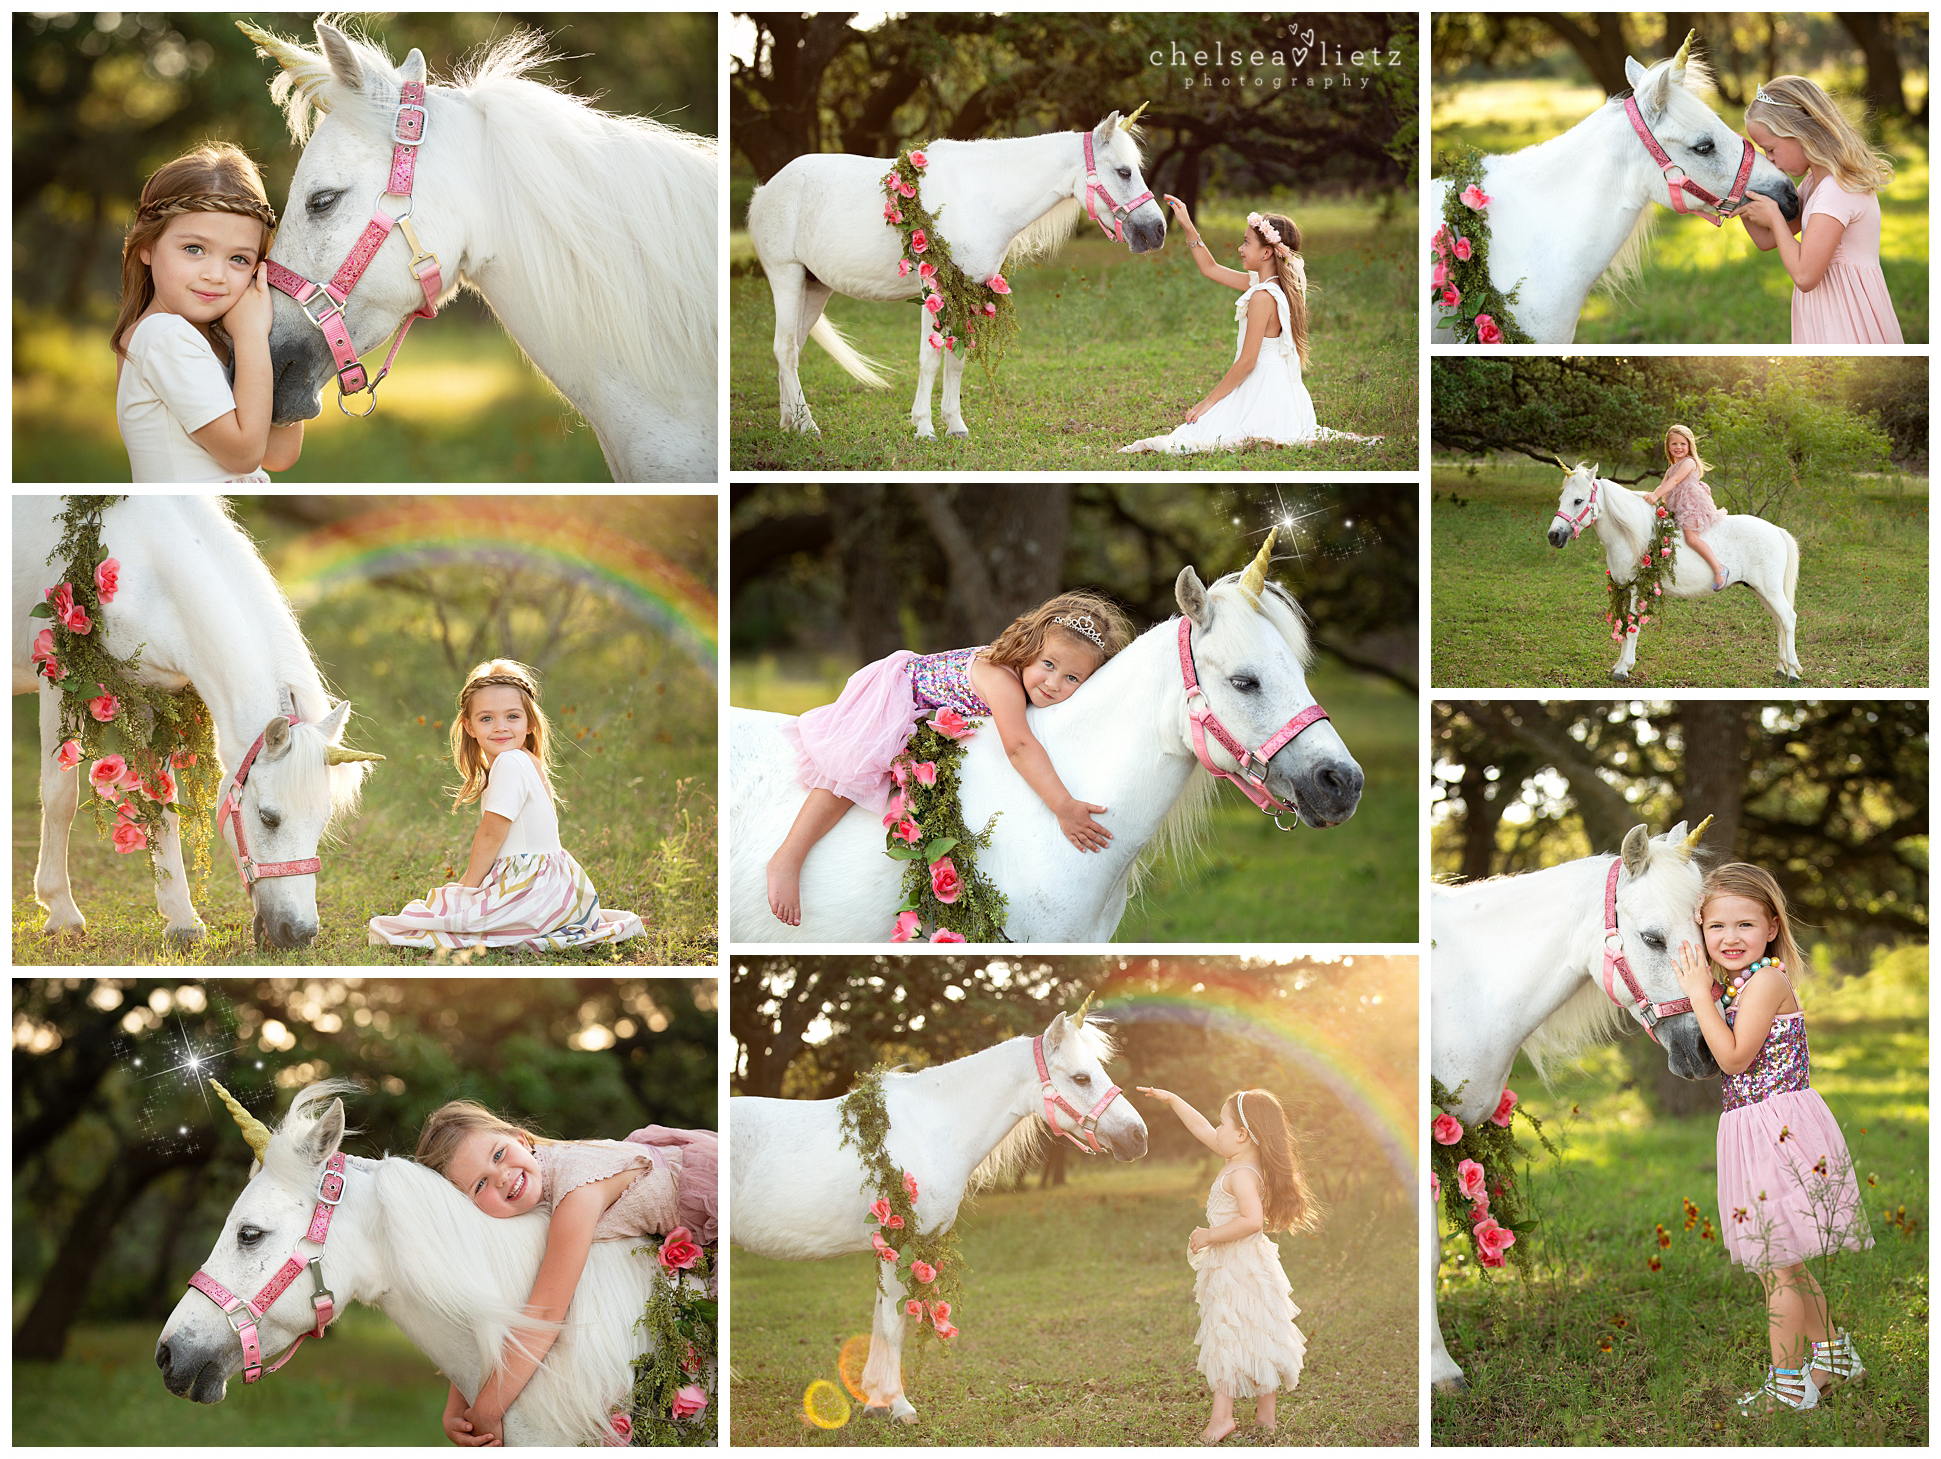 unicorn photos | Chelsea Lietz Photography